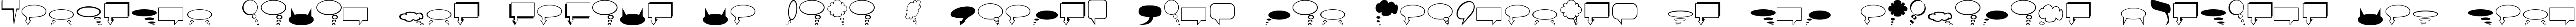 Пример написания шрифтом Balloons текста на испанском